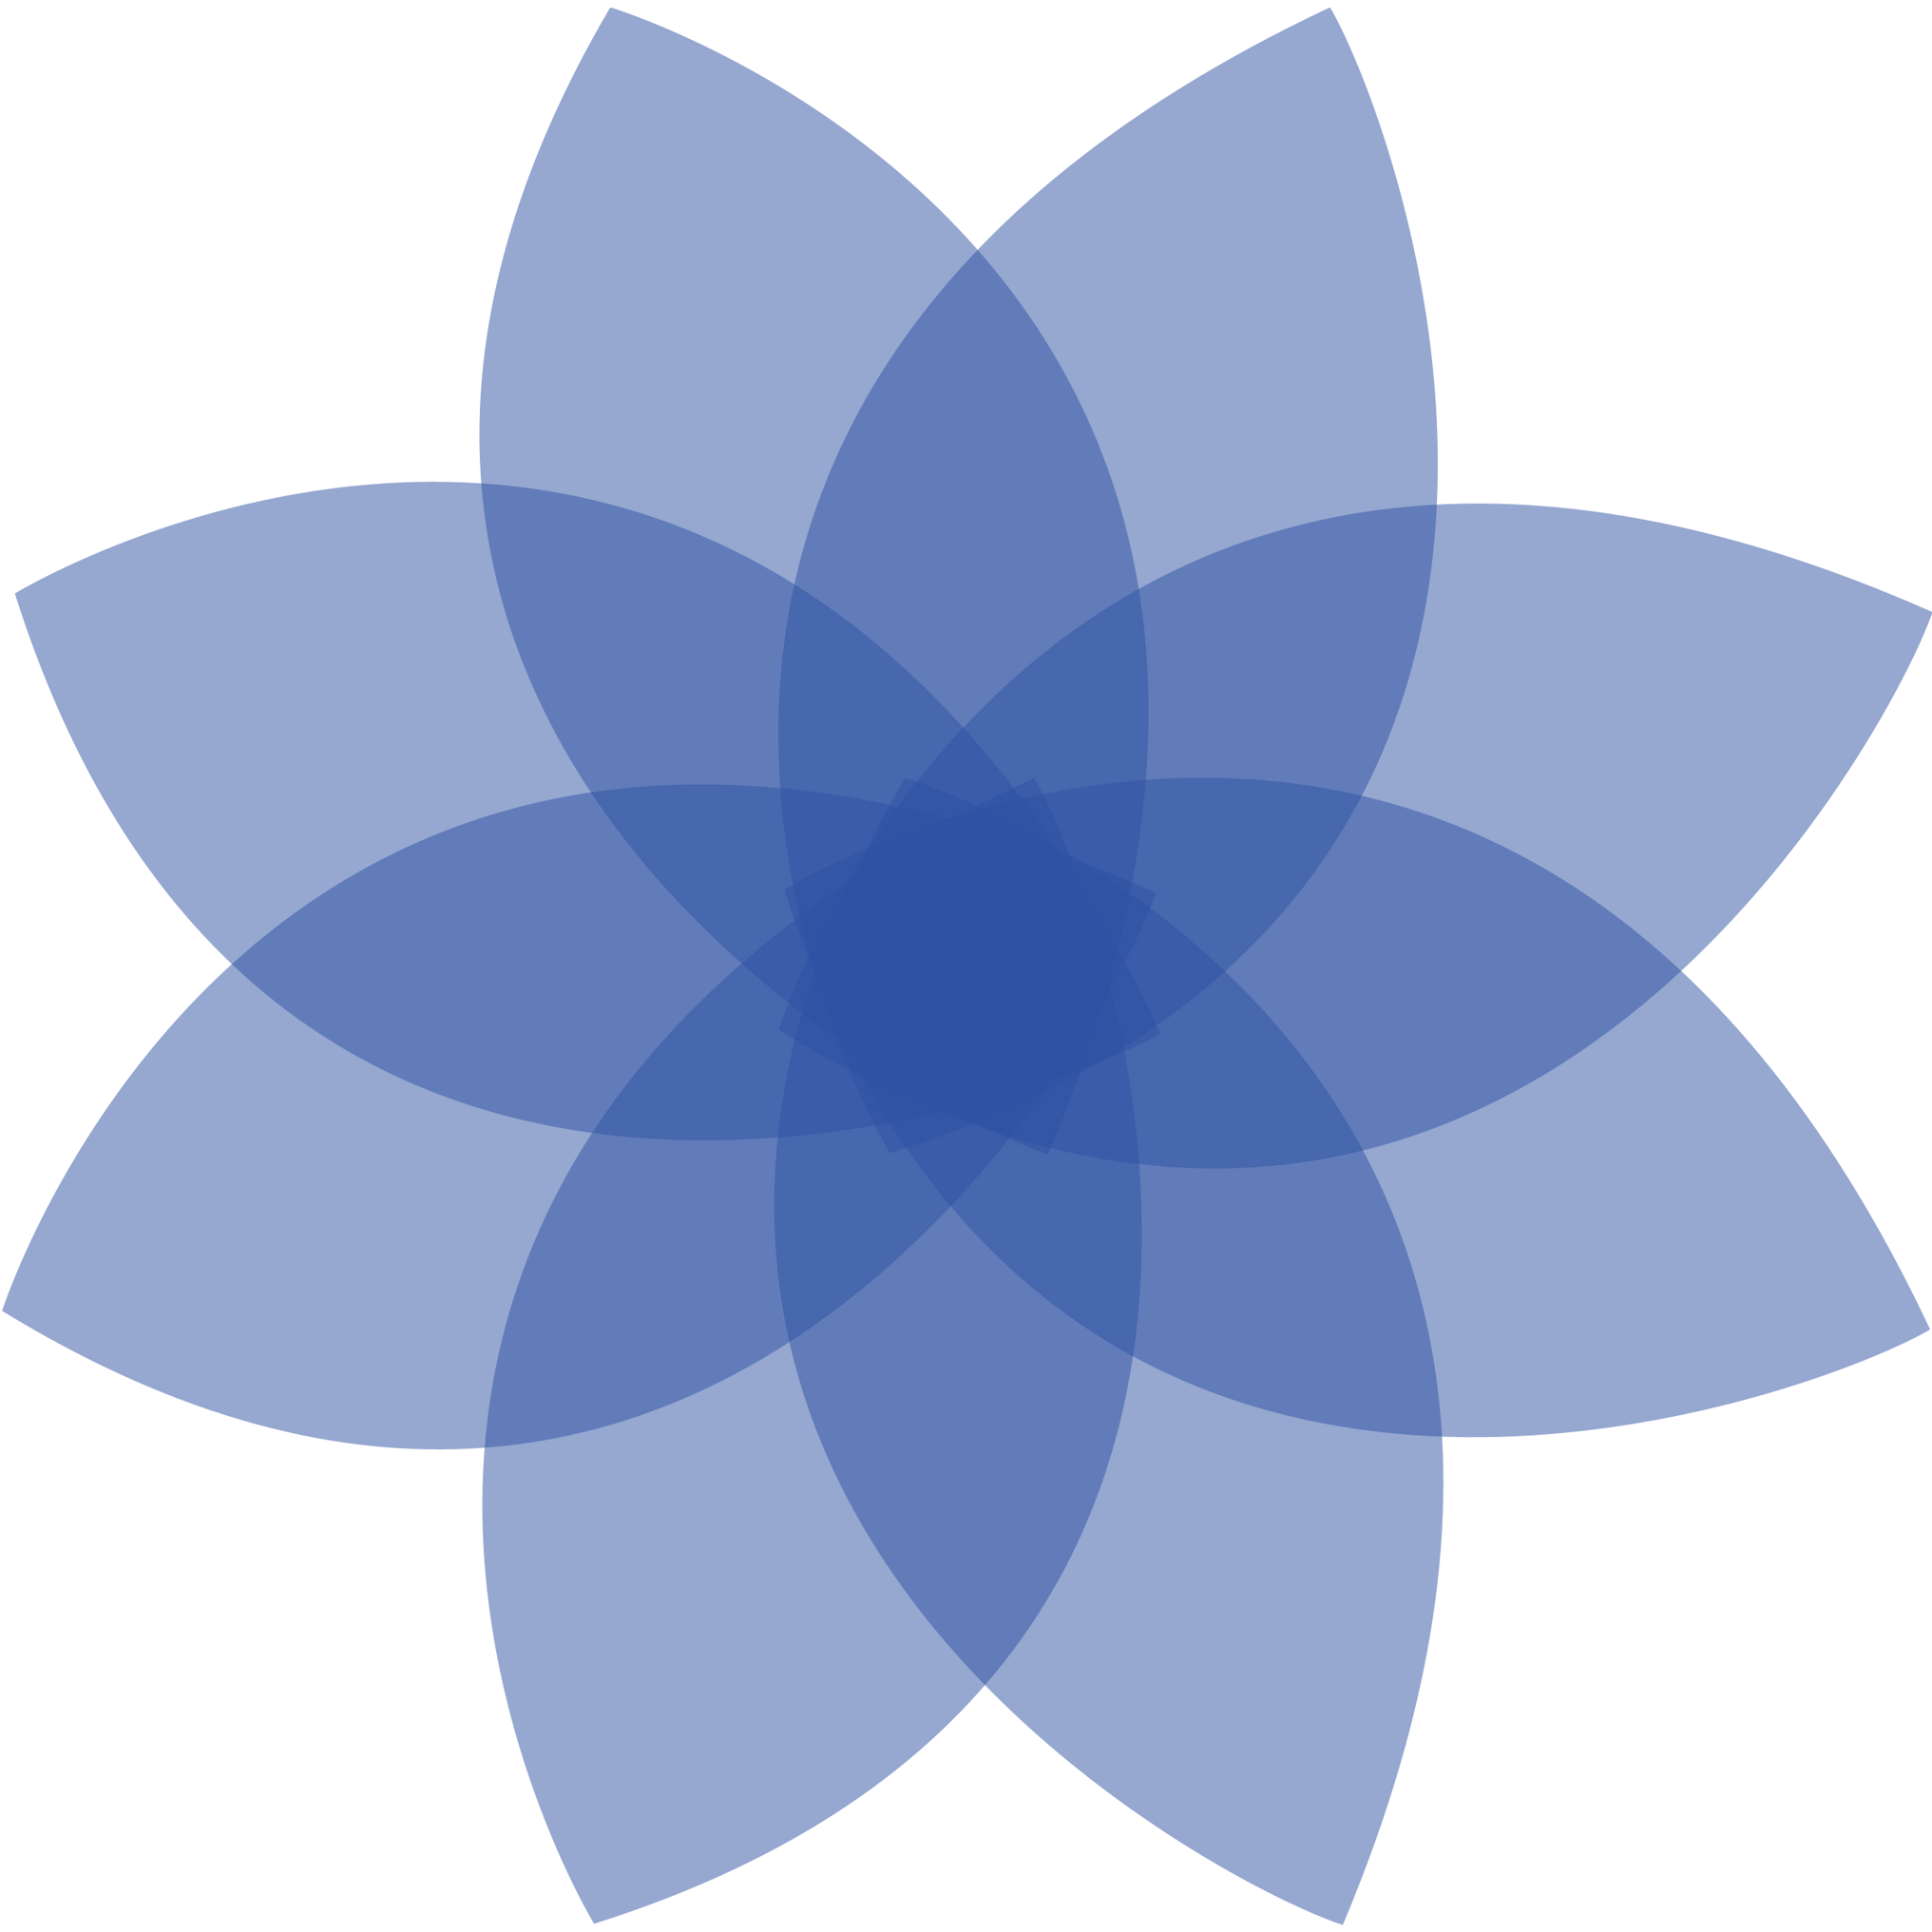 CRG Logo